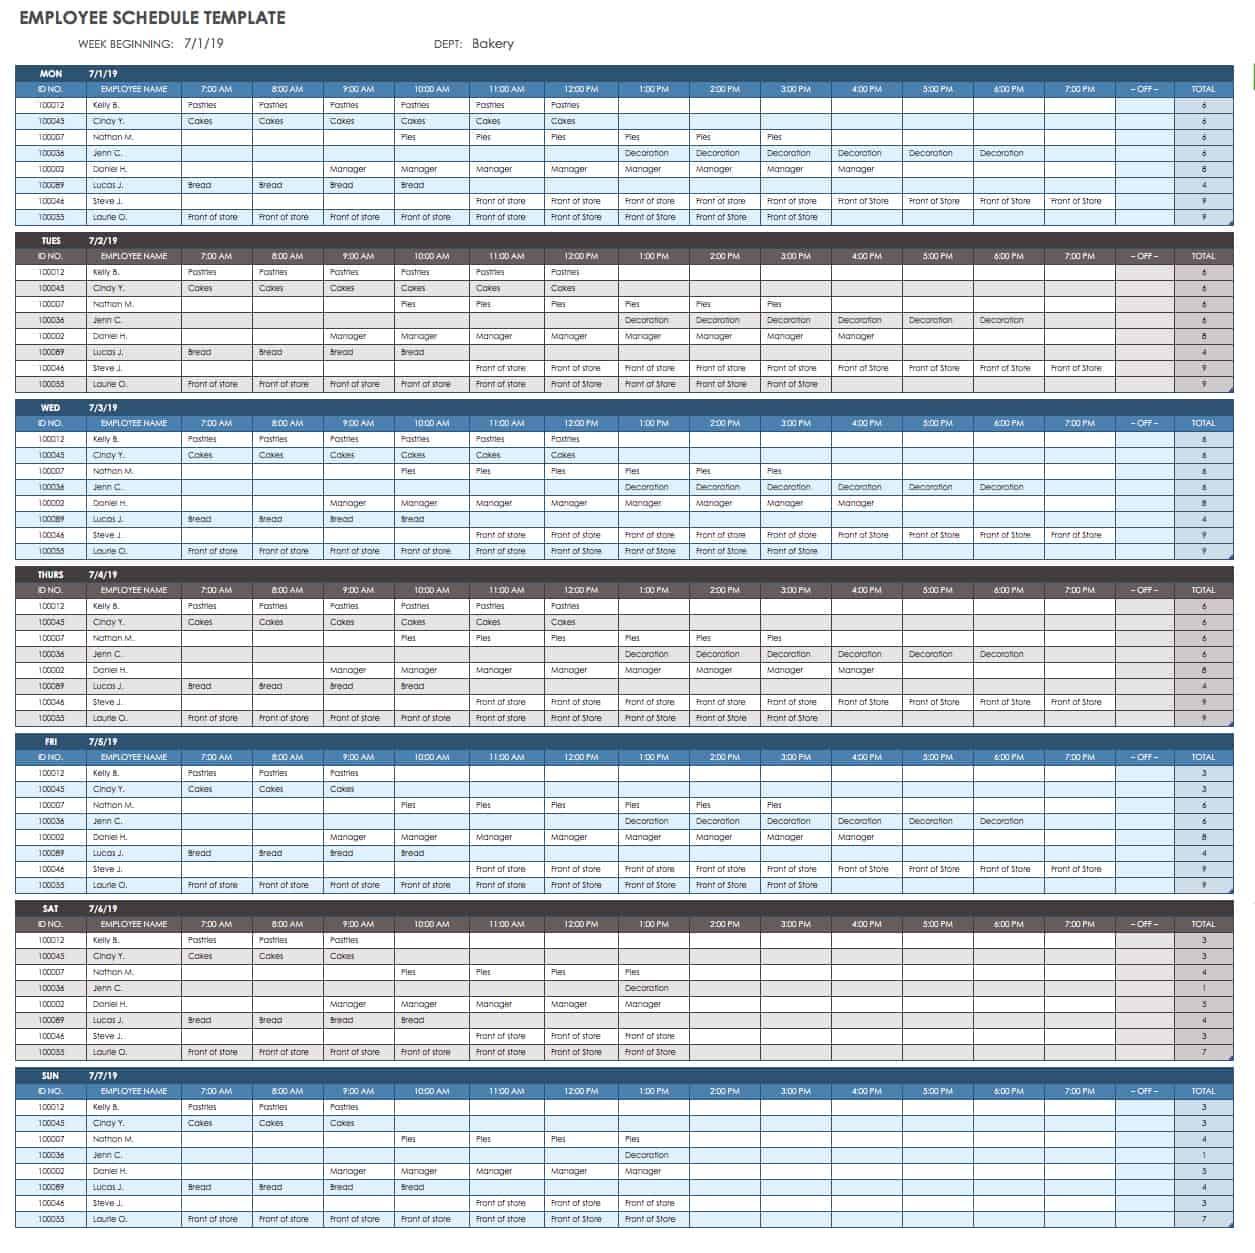 Employee Schedule Template Excel Free from www.smartsheet.com